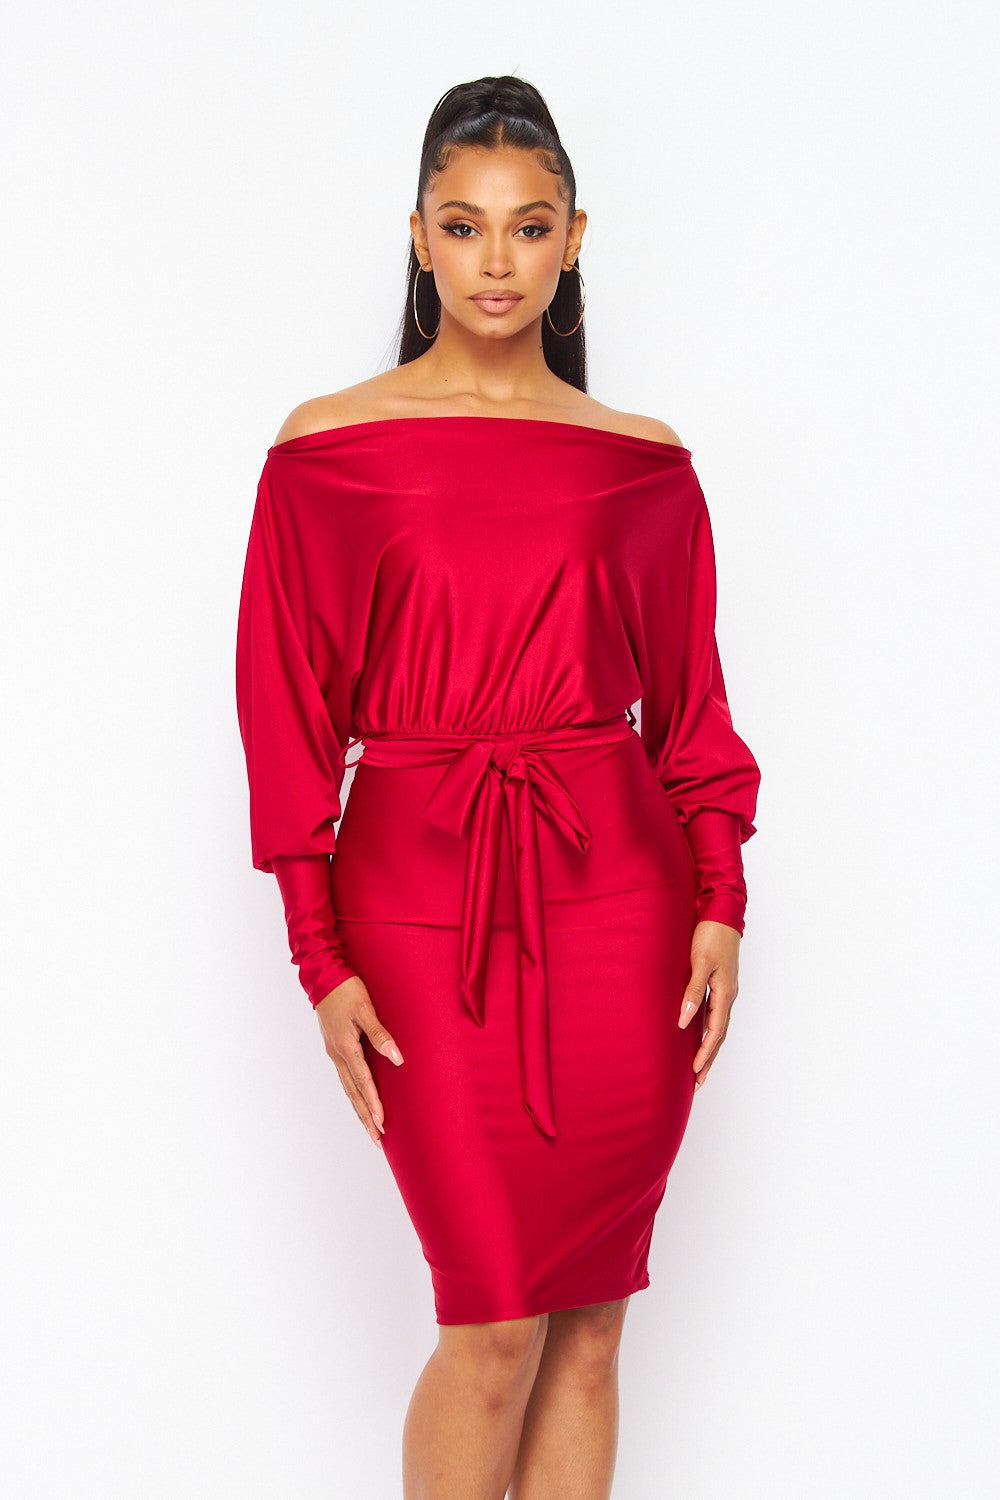 Women's red off the shoulder dress